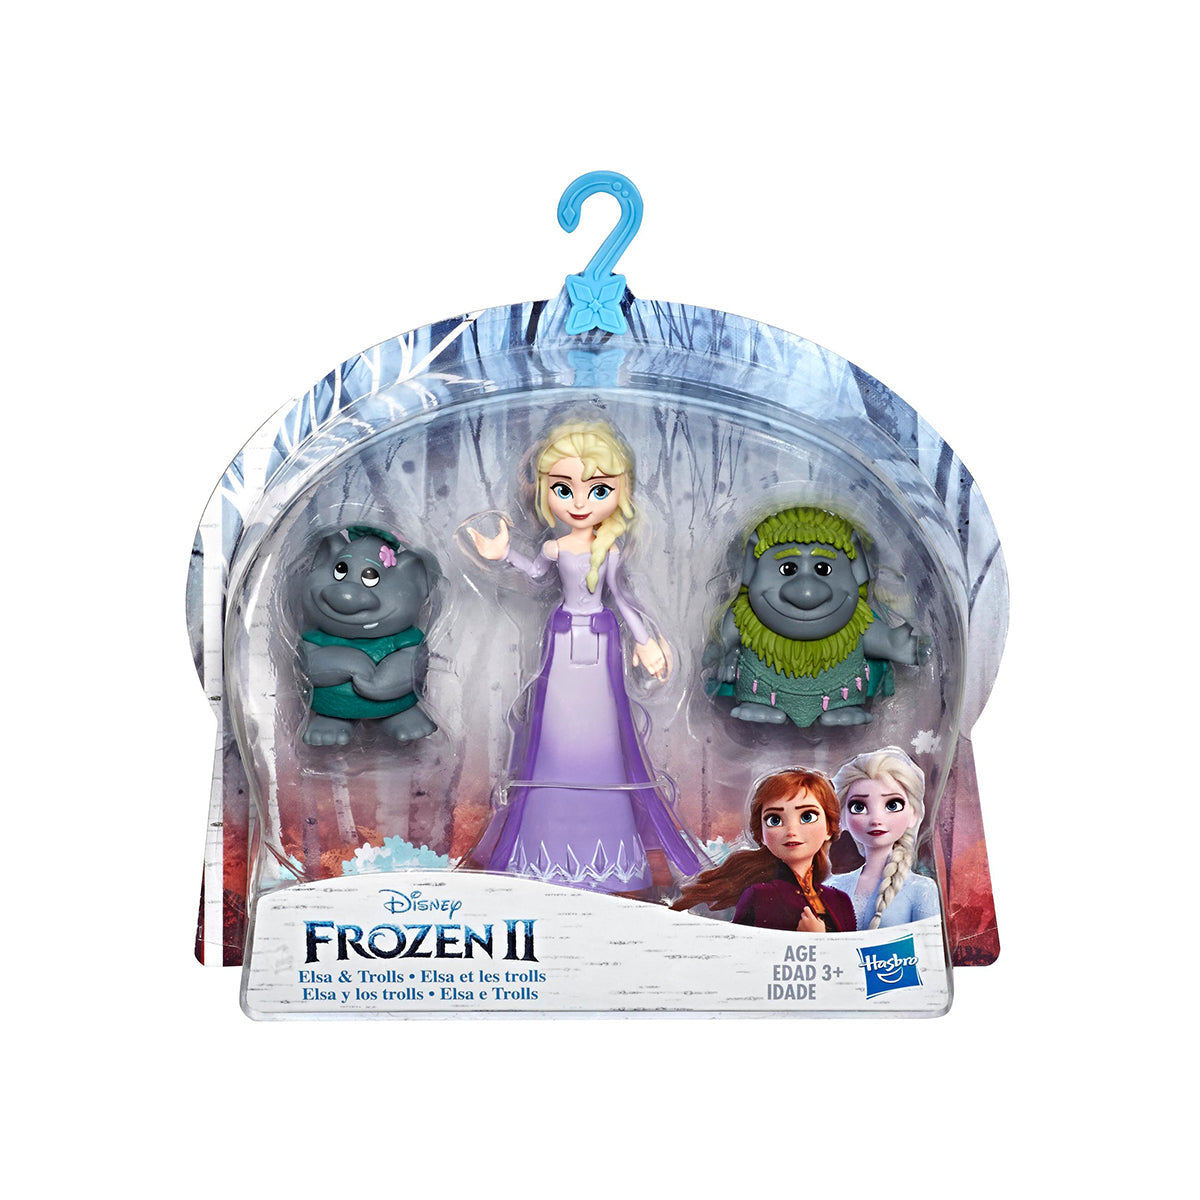 Disney Frozen - Elsa Small Doll With Troll Figures